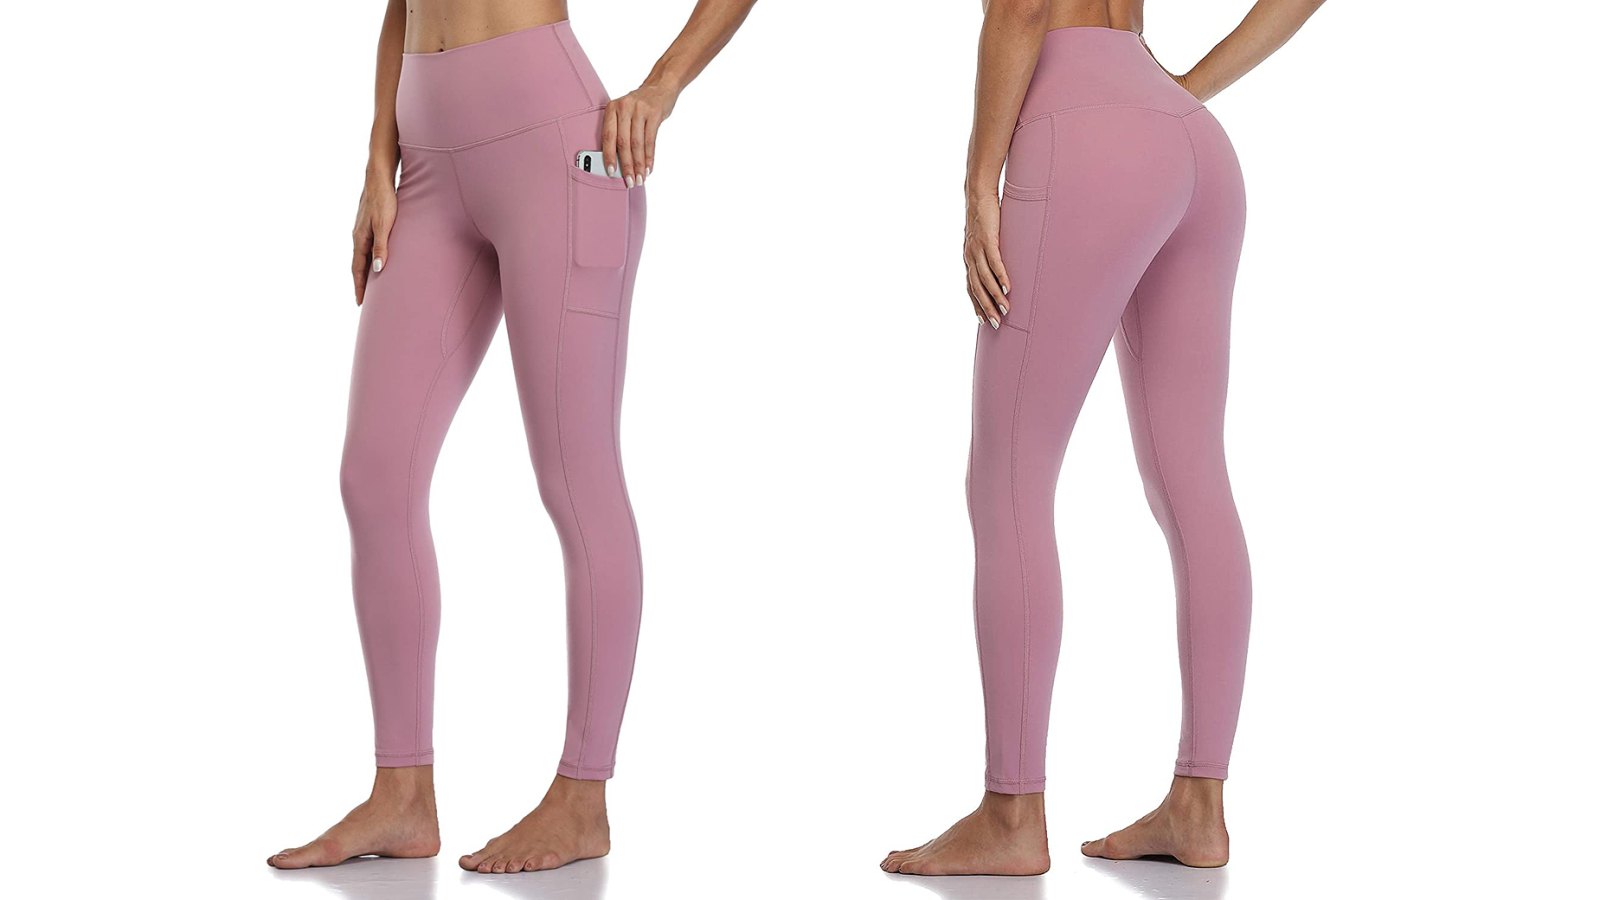 https://www.usmagazine.com/wp-content/uploads/2020/07/colorfulkoala-leggings.jpg?w=1600&h=900&crop=1&quality=86&strip=all